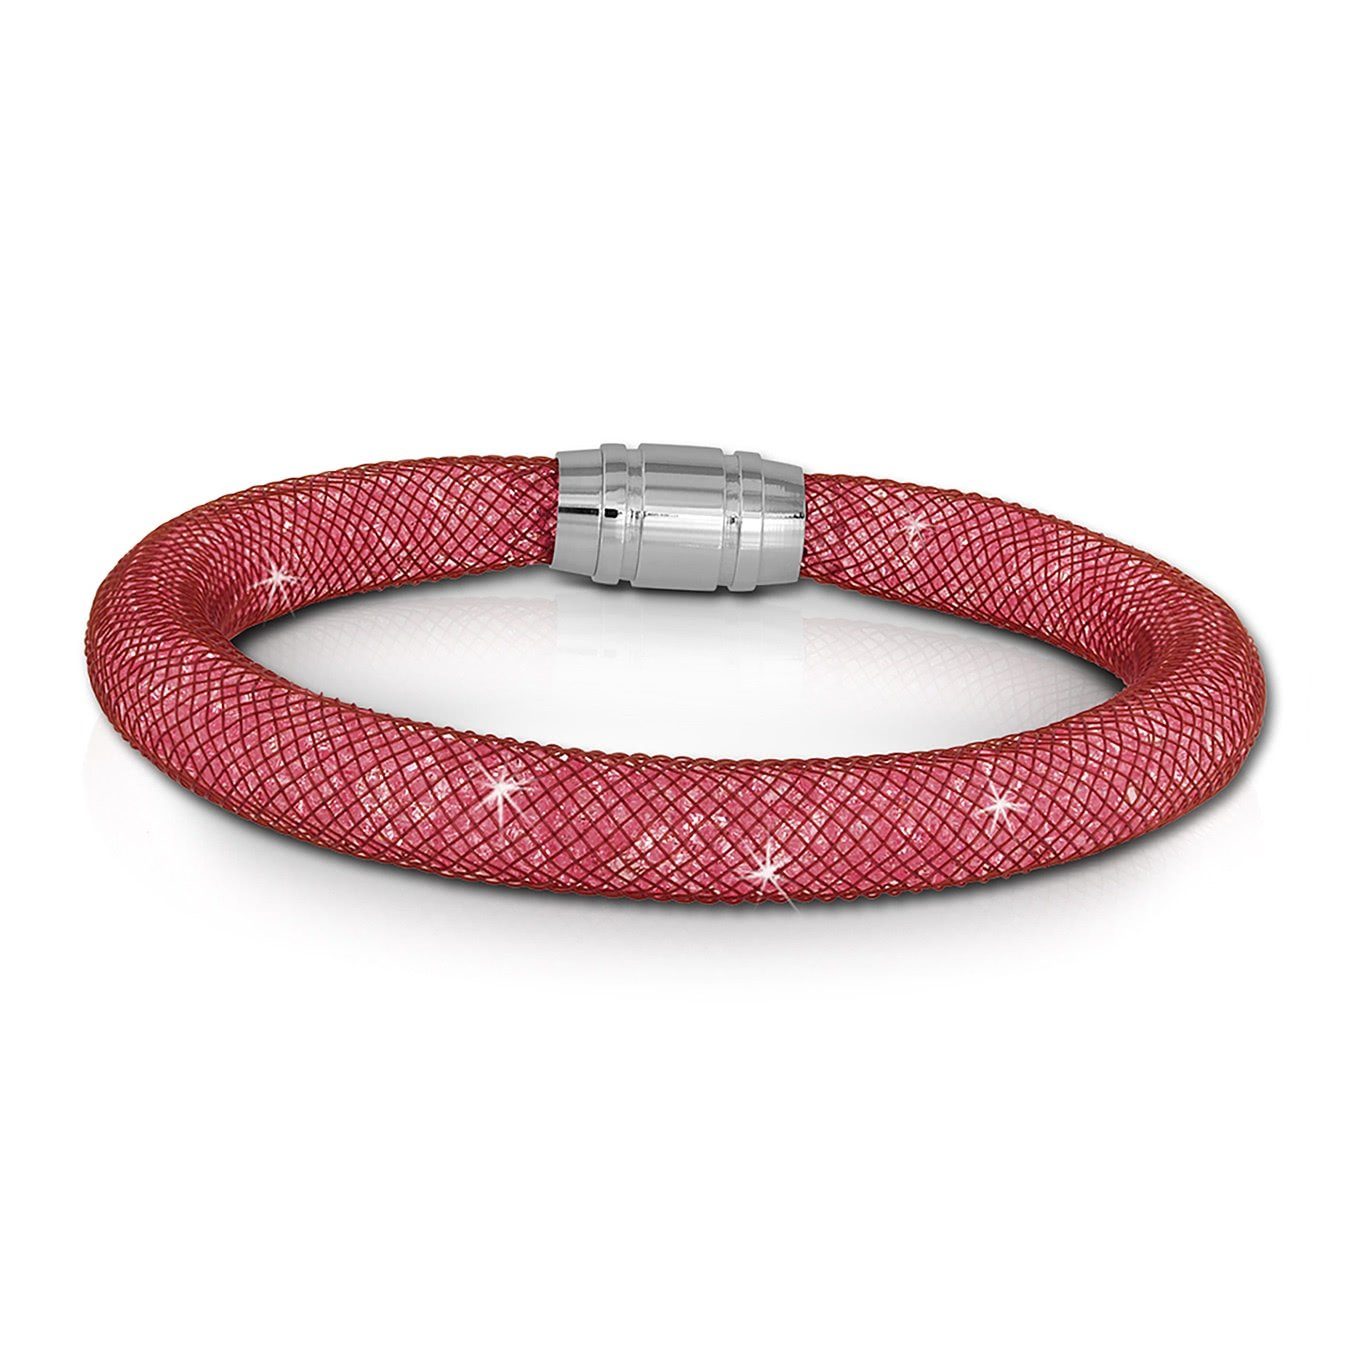 SilberDream Edelstahlarmband SilberDream Armband rosa Arm-Schmuck (Armband), Damenarmband mit Edelstahl-Verschluss, Farbe: rot, rosa Kristalle